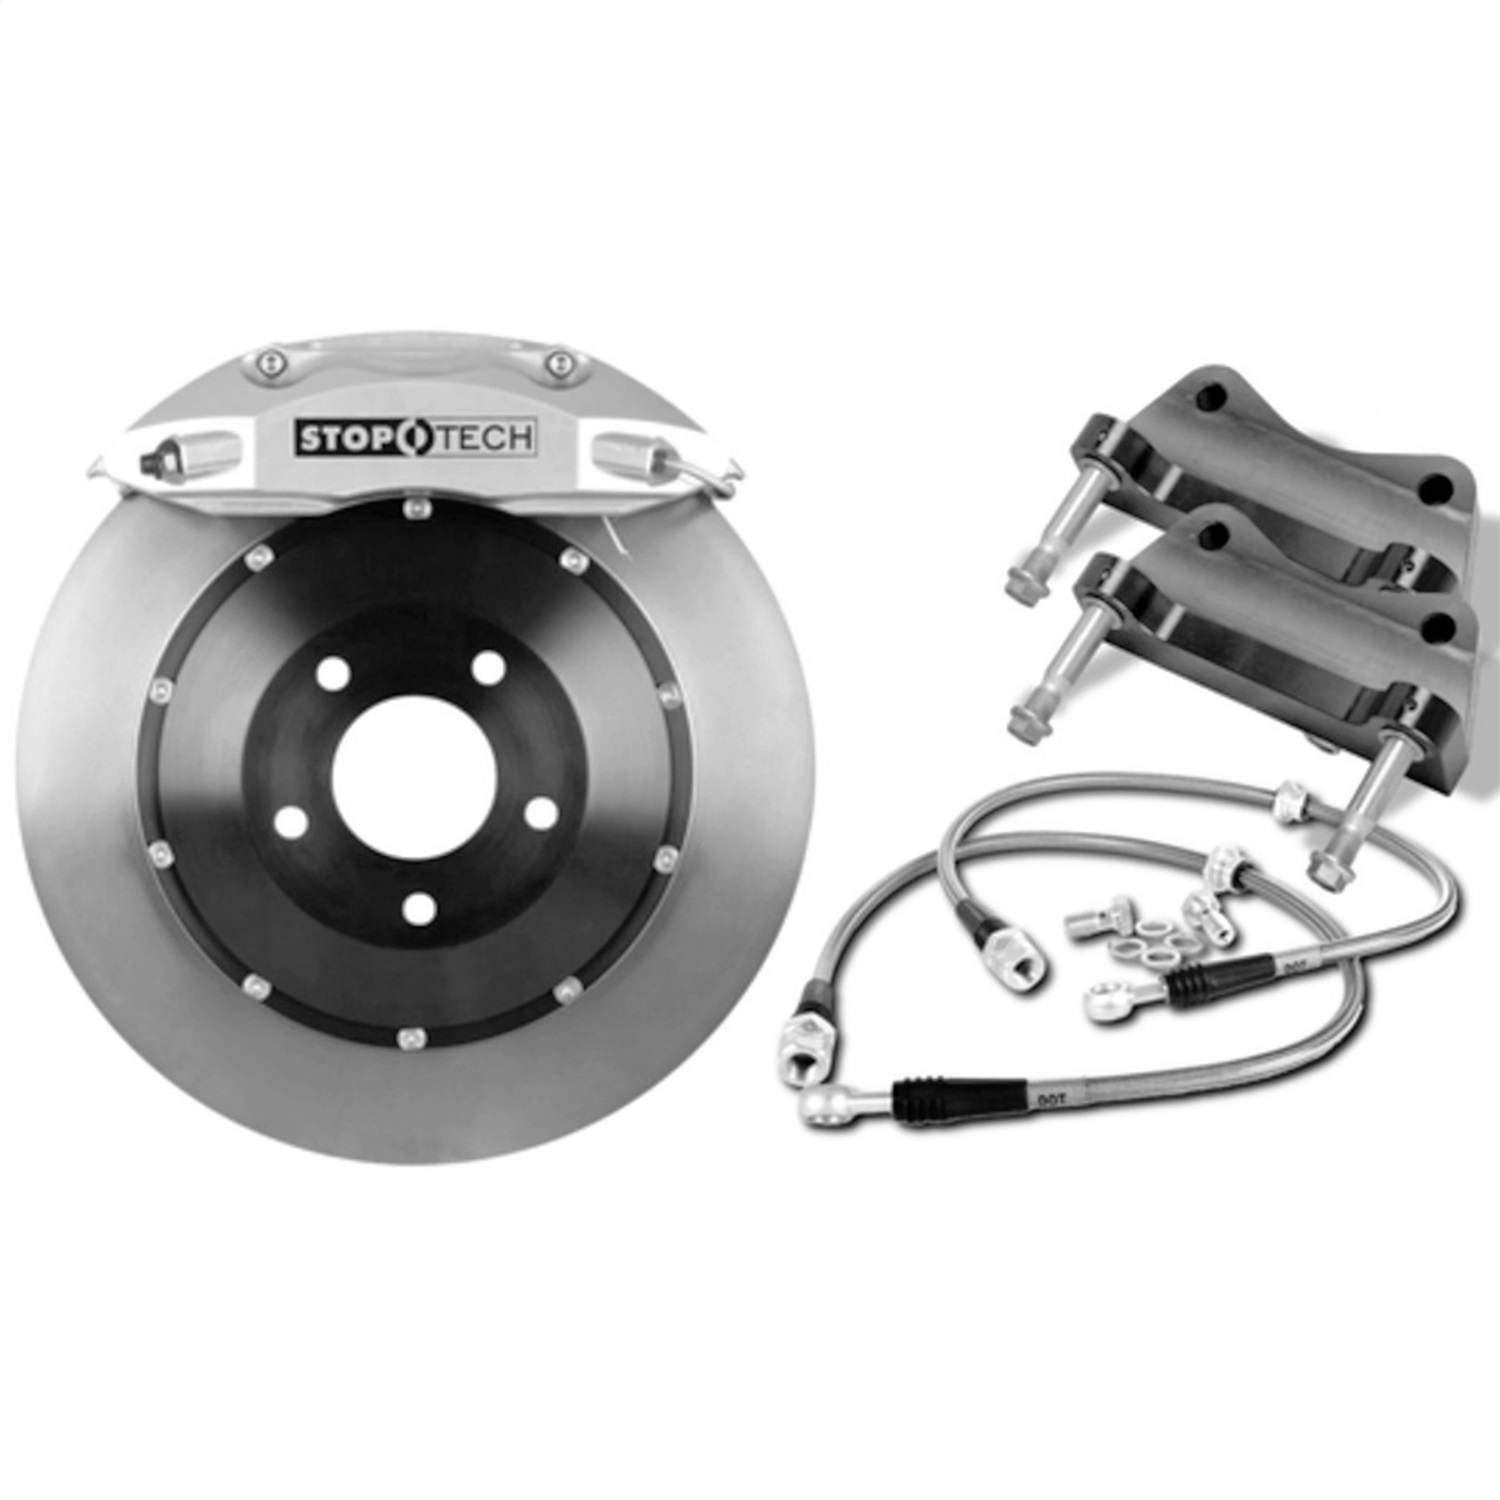 StopTech 83.895.4300.71 Big Brake Kit w/2 Piece Rotor